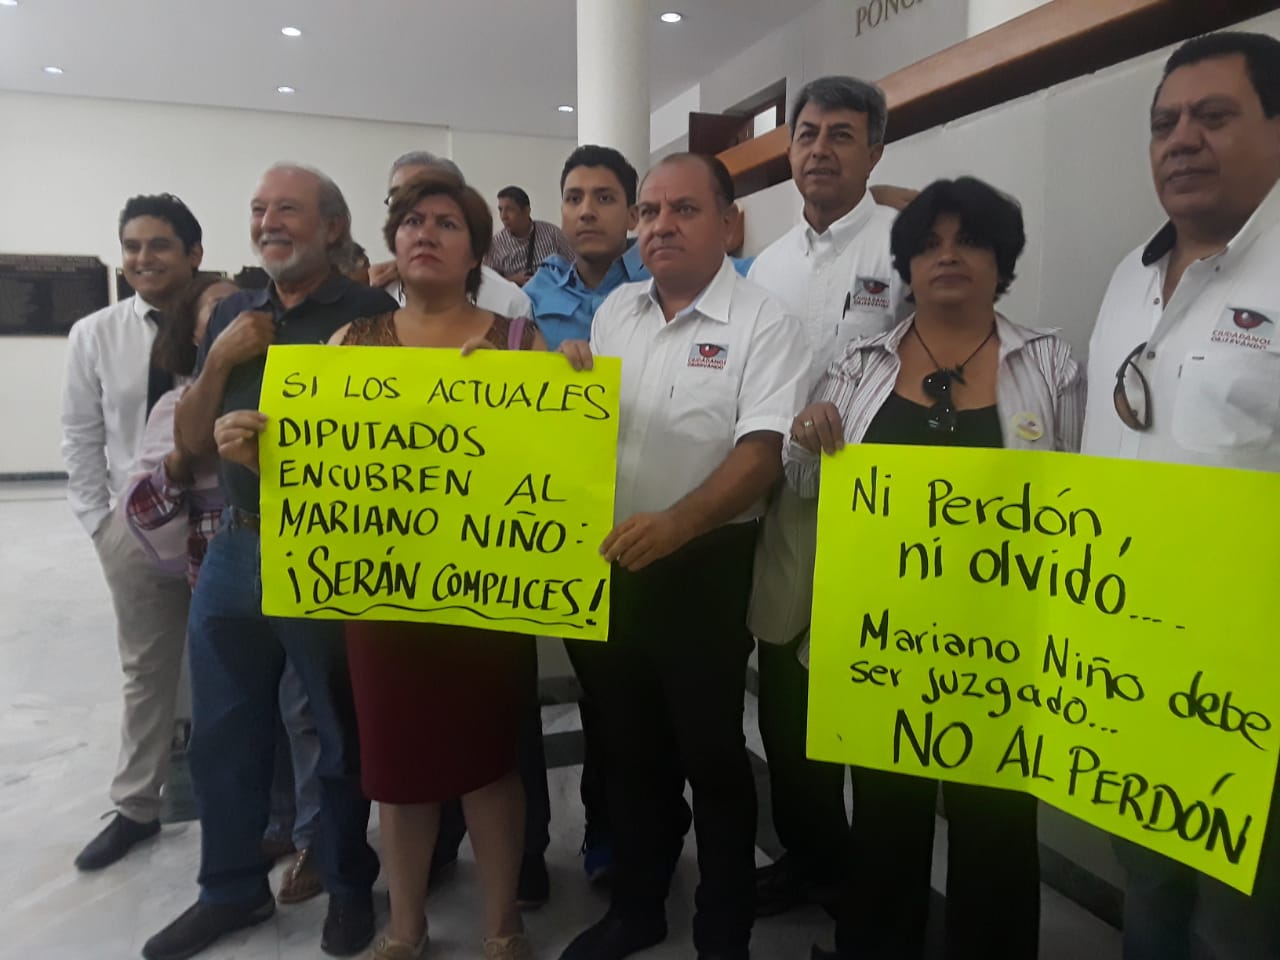  Jucopo no aceptará acuerdo reparatorio con Mariano N., asegura Edson Quintanar